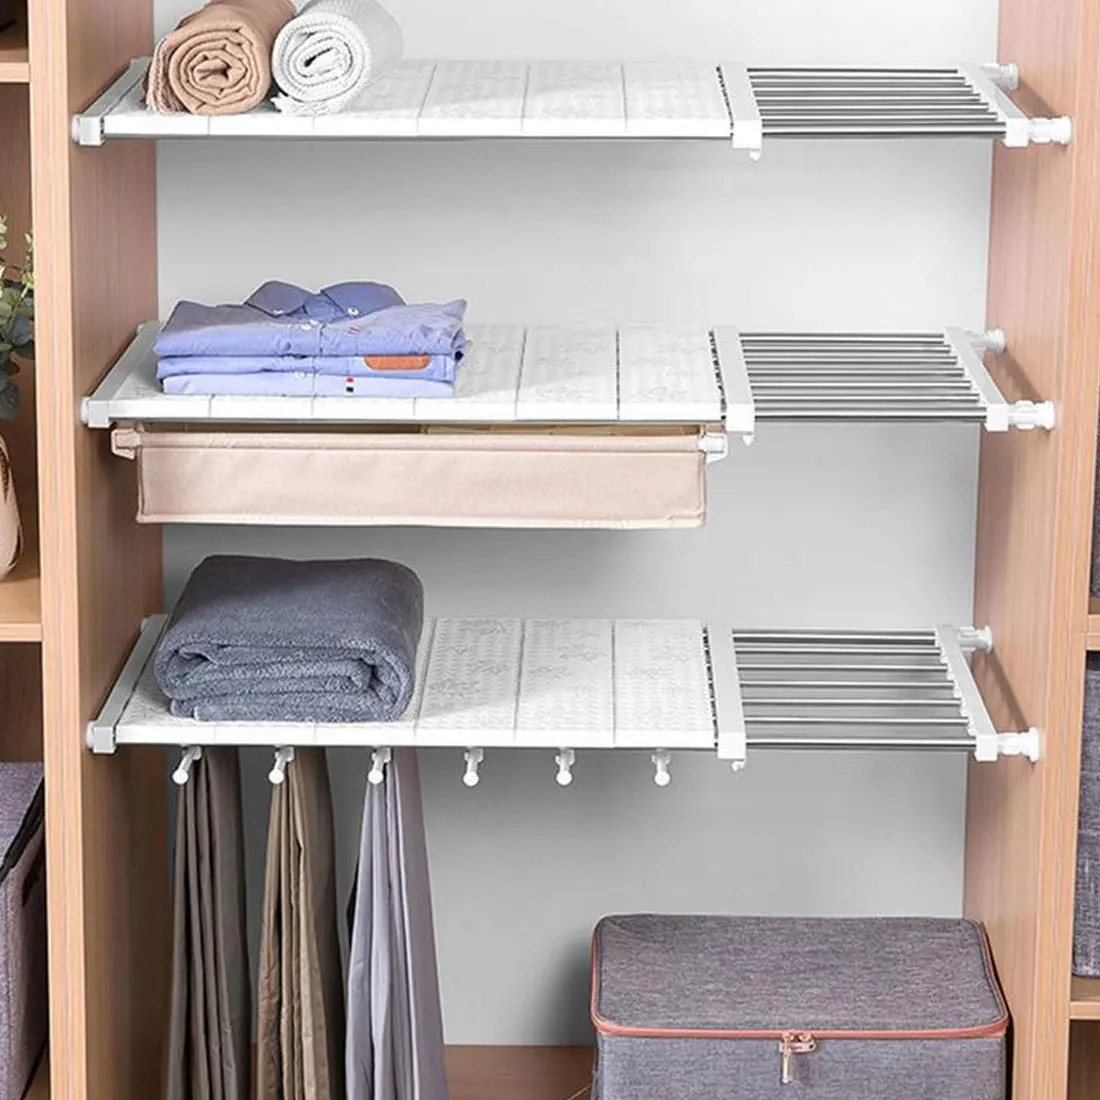 

Wall-mounted kitchen racks Adjustable closet storage racks space-saving wardrobe decoration shelves perforated layered storage